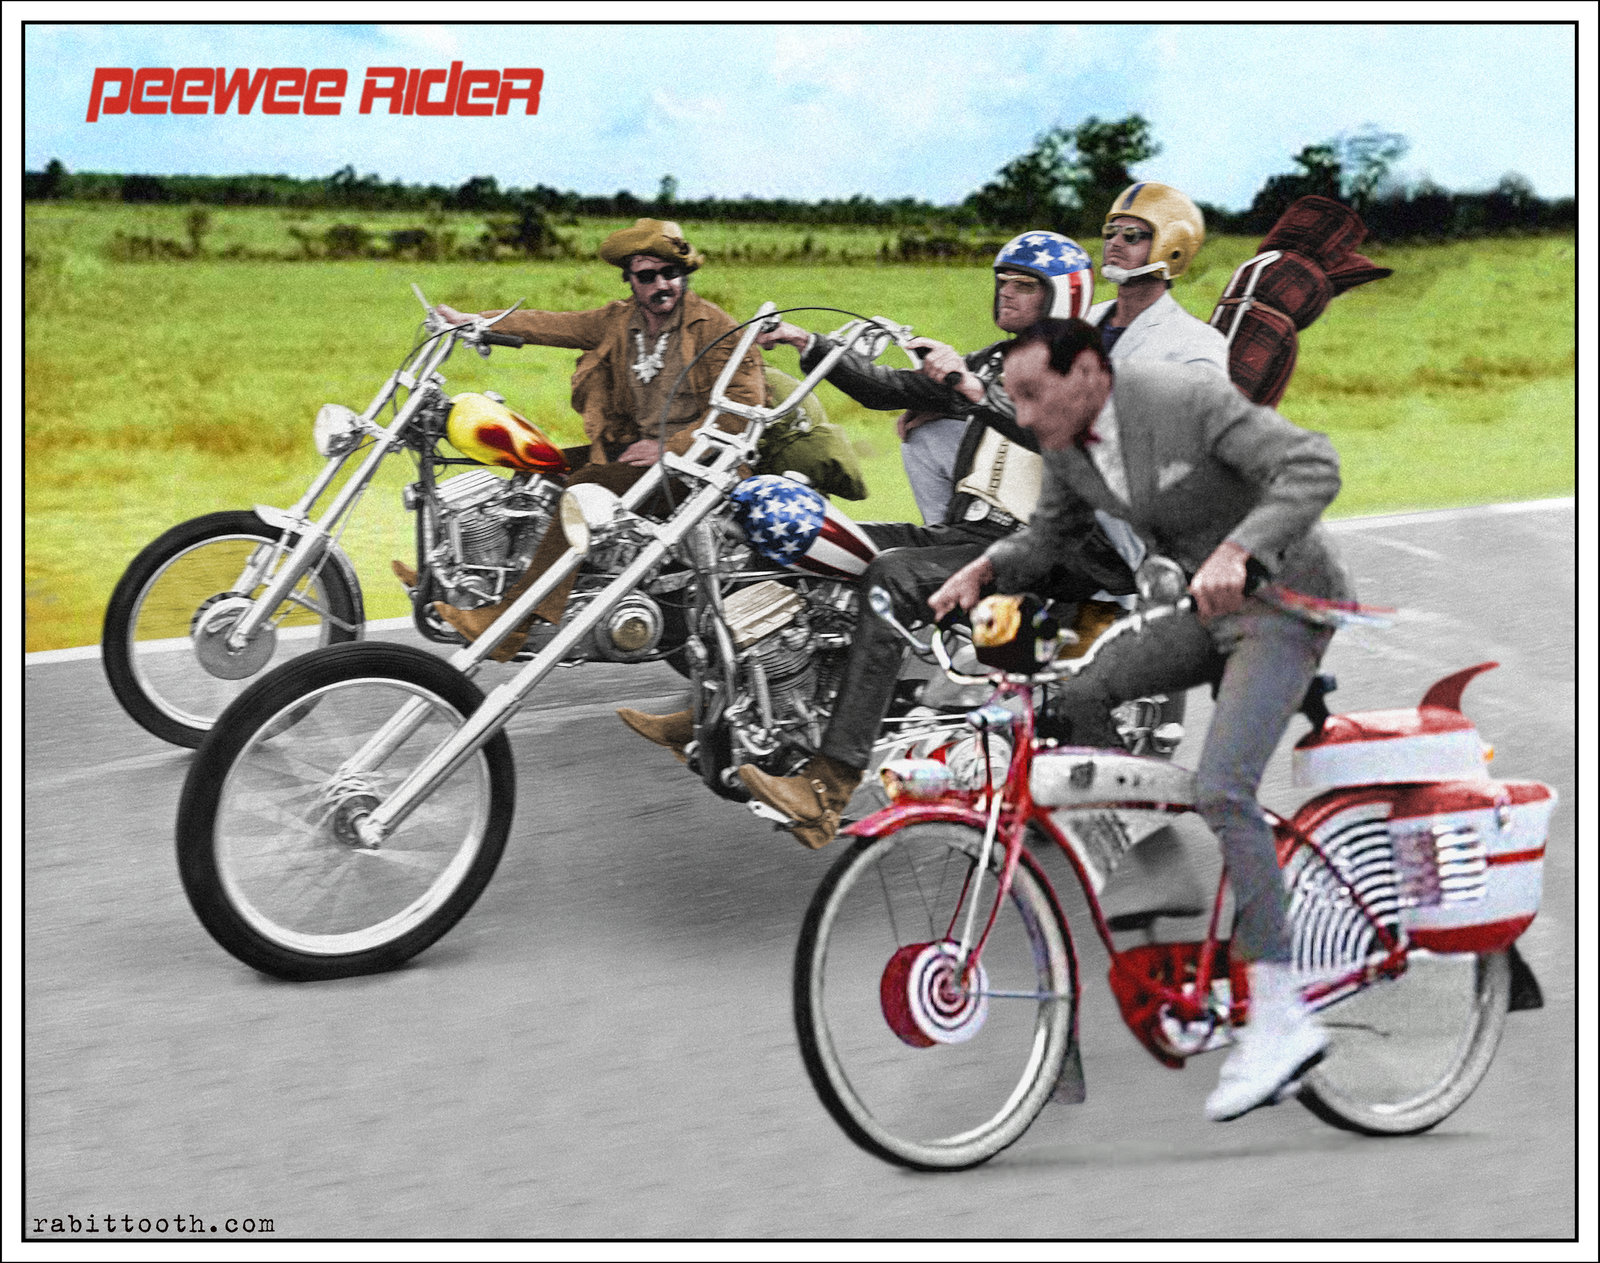 Easy Rider #7